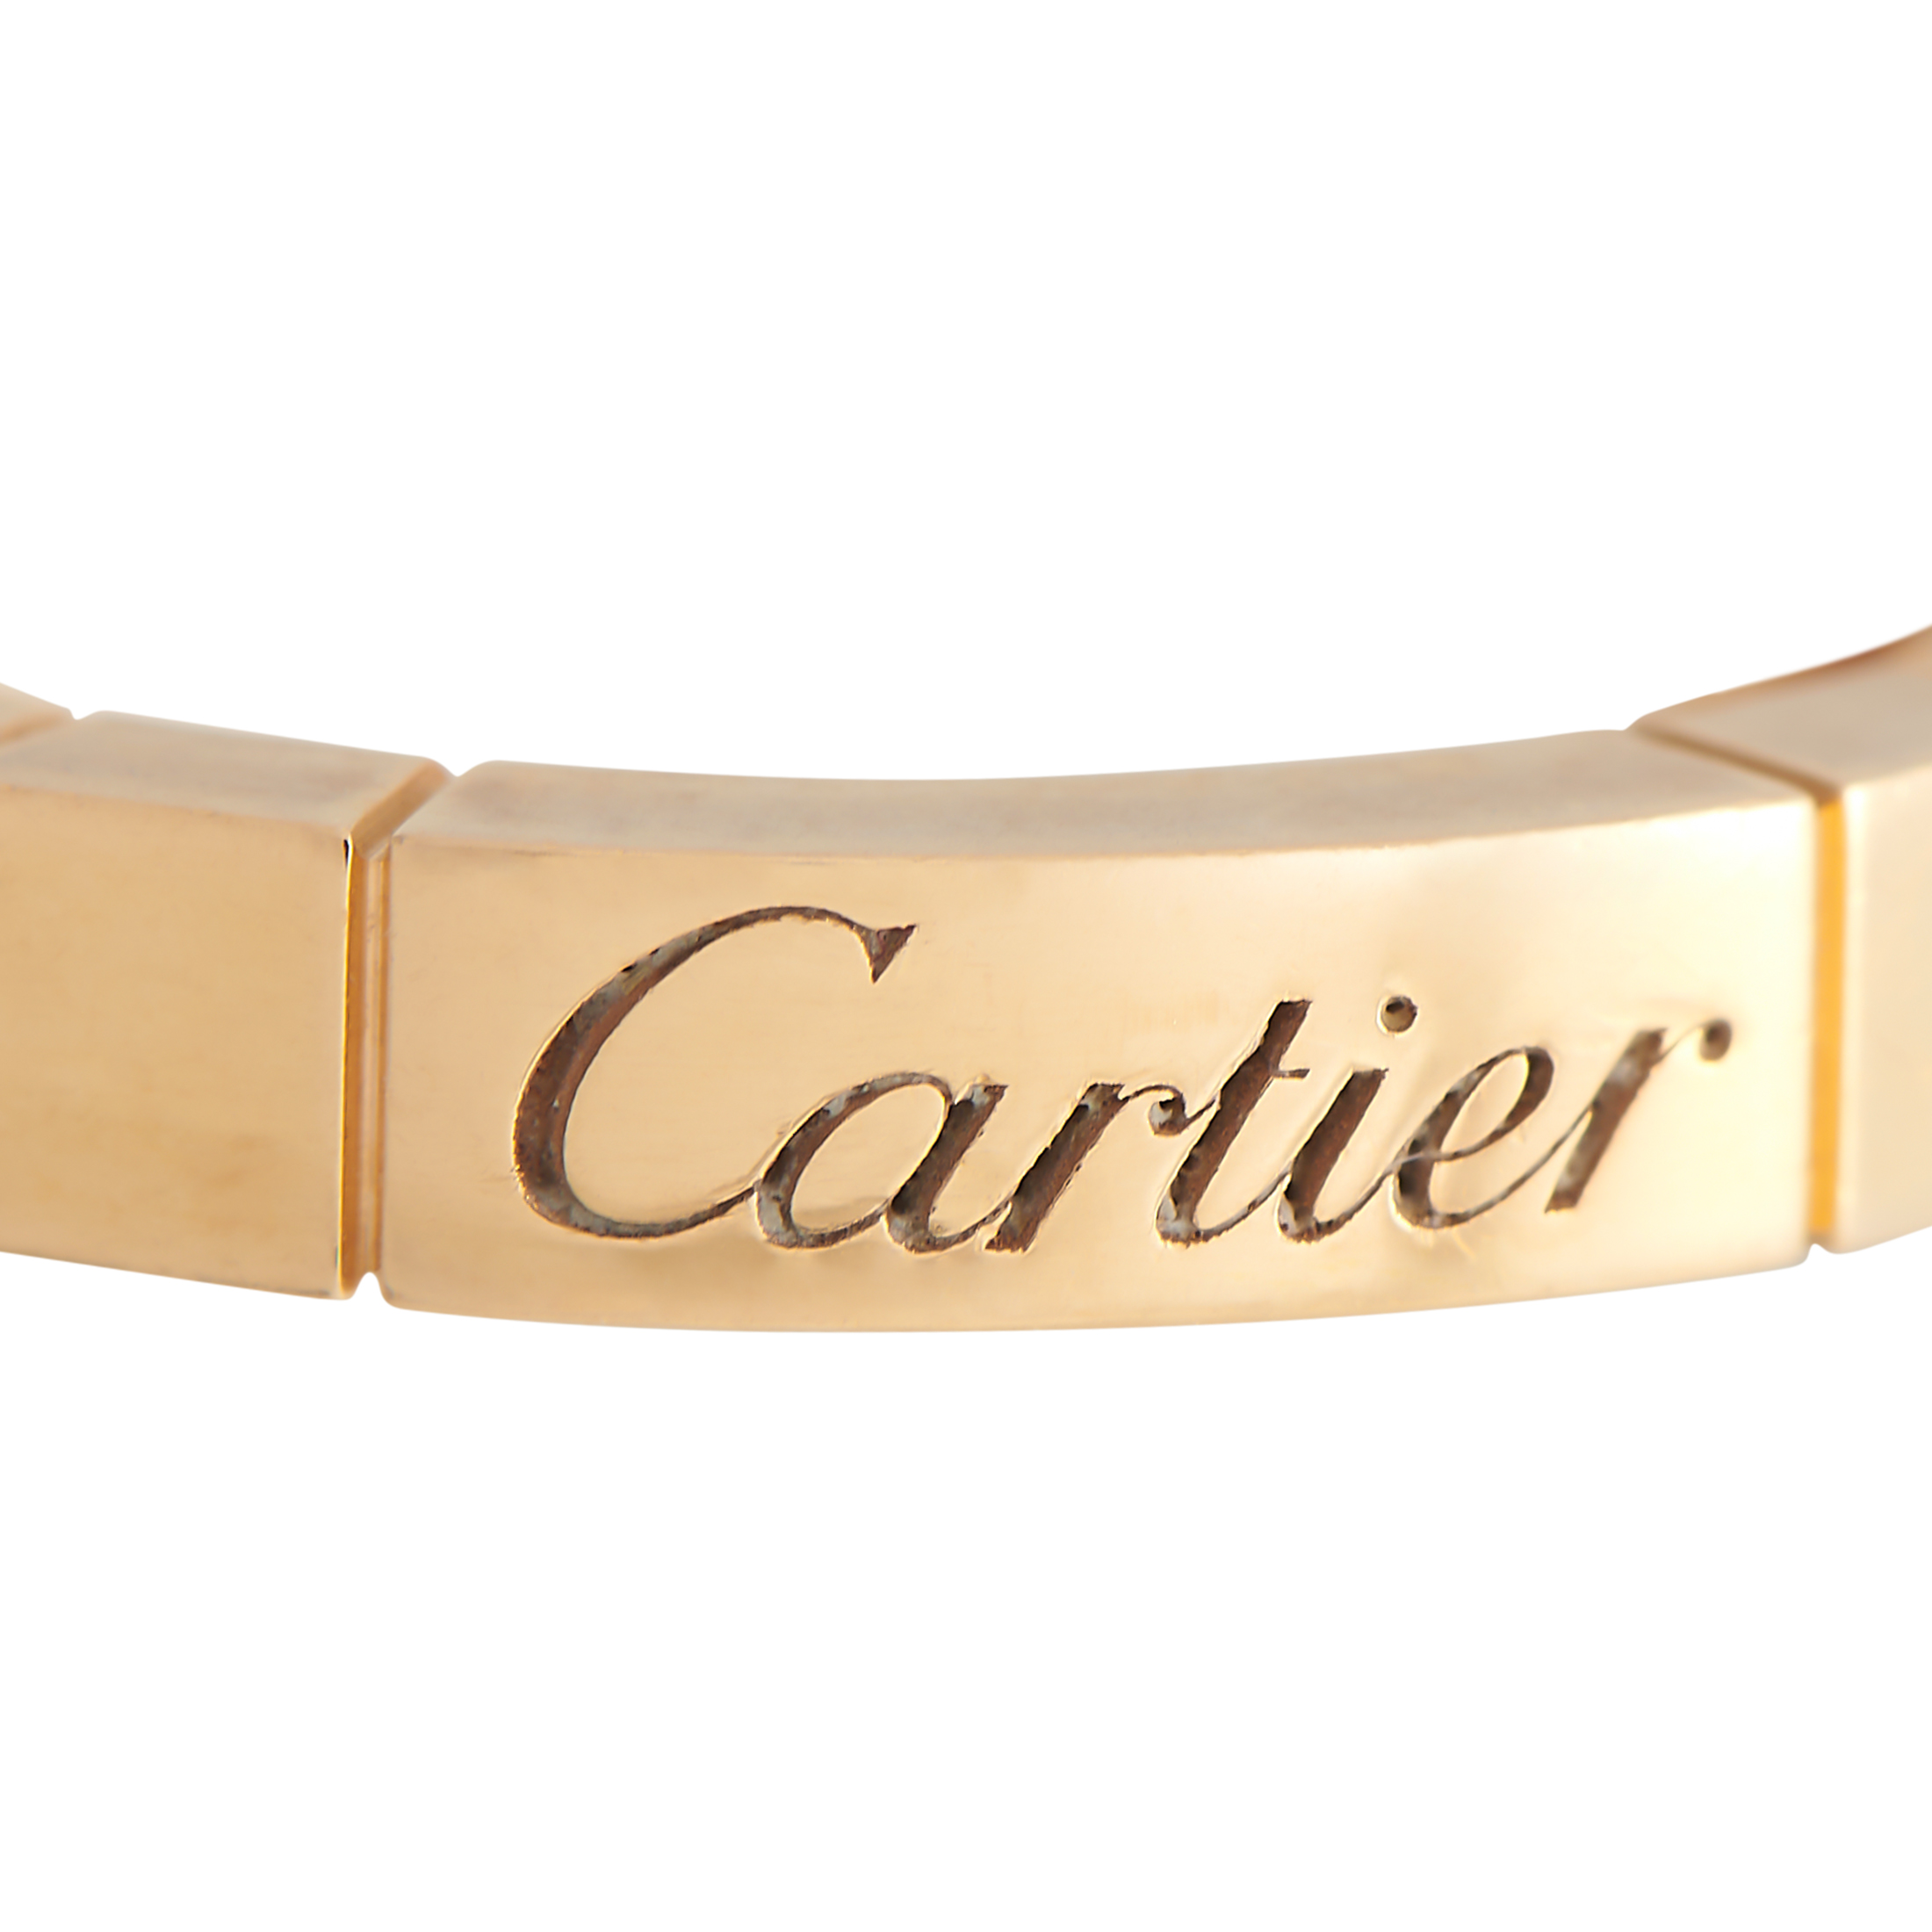 Cartier Rose Gold Half Diamond and Pink Sapphire Love Bracelet